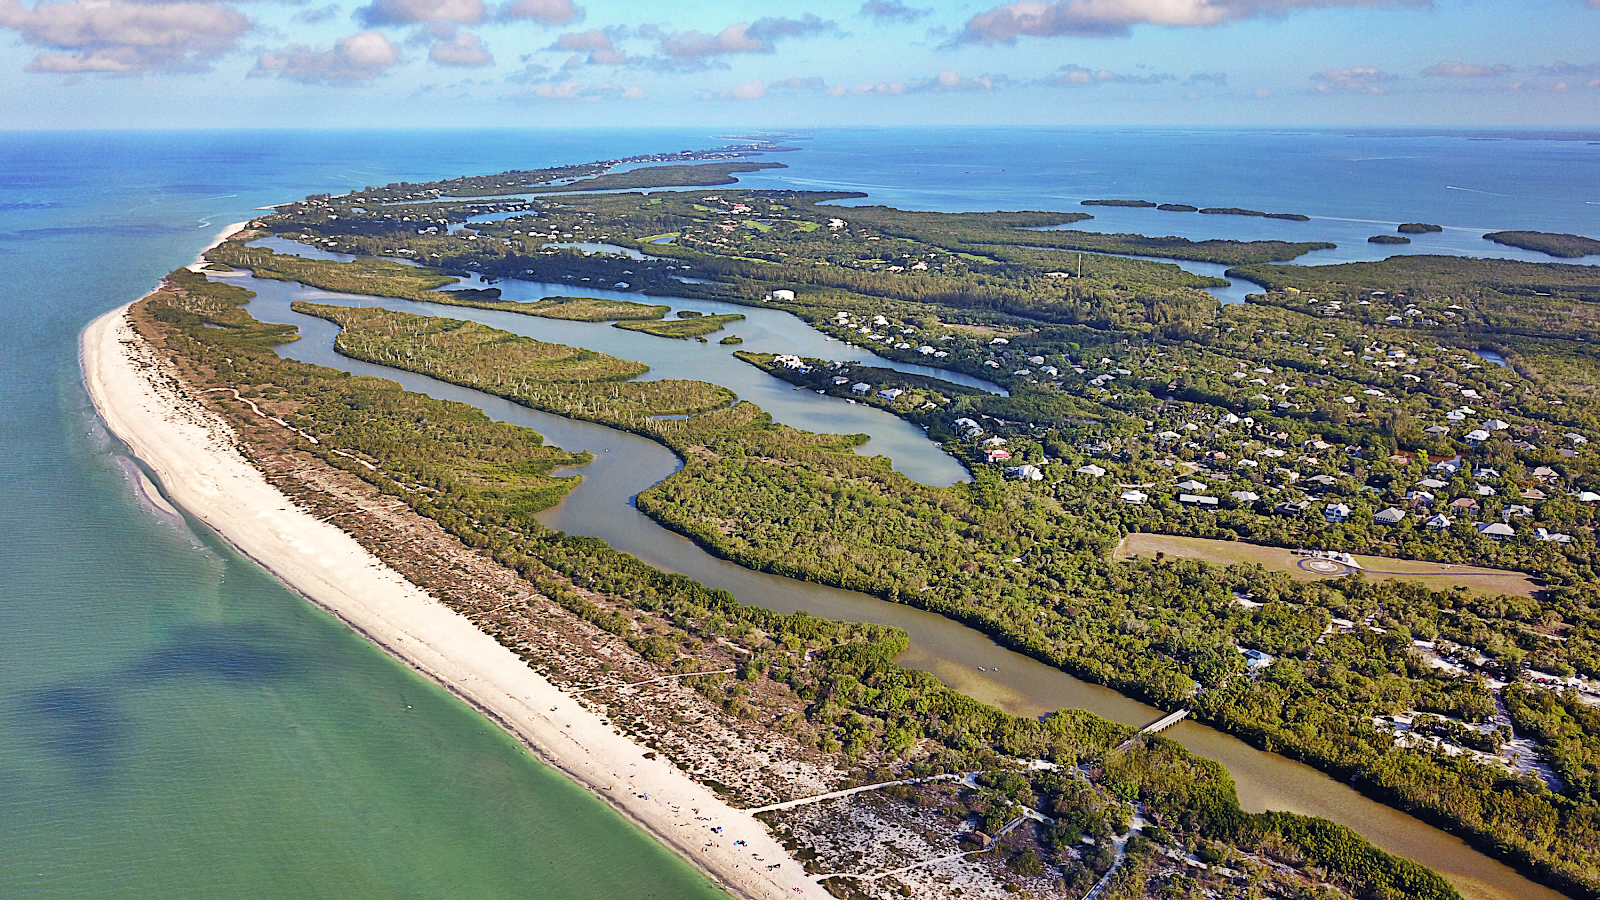 Fotografija Bowman's beach nahaja se v naravnem okolju